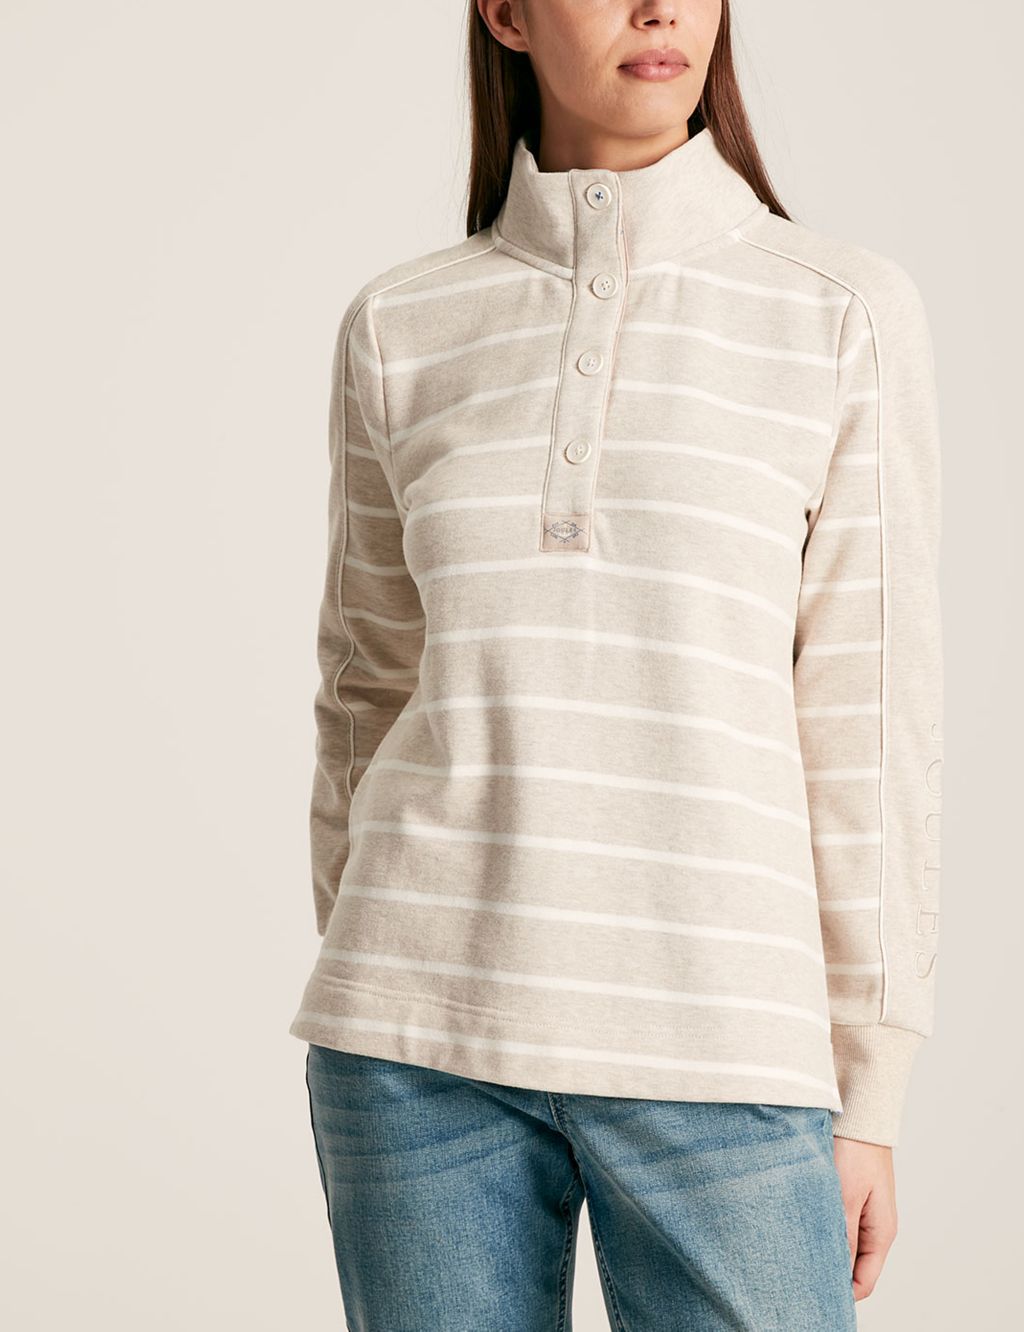 Pure Cotton Striped Sweatshirt